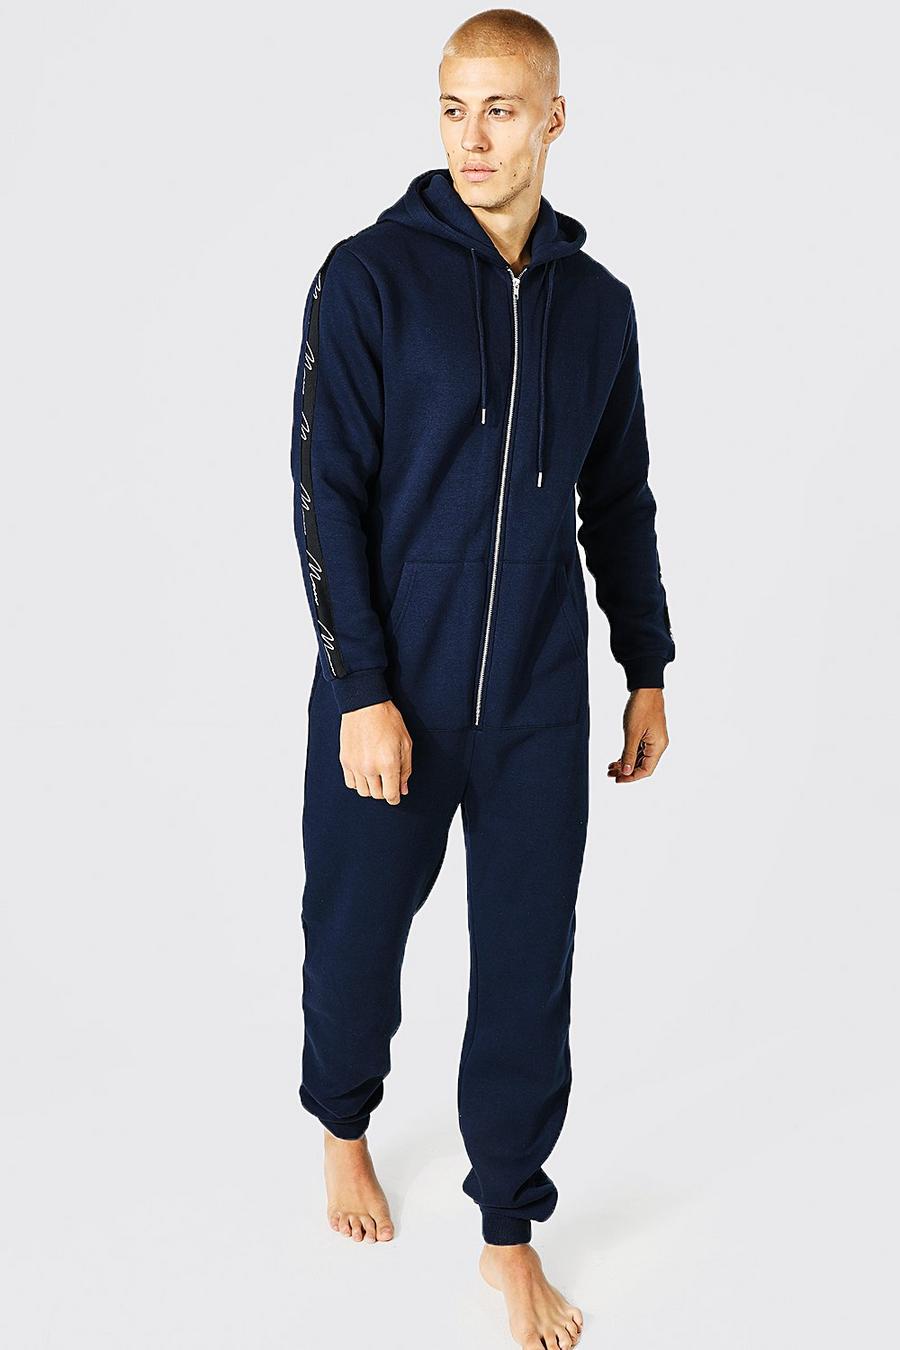 Pijama enterizo MAN Signature con capucha y franja, Navy azul marino